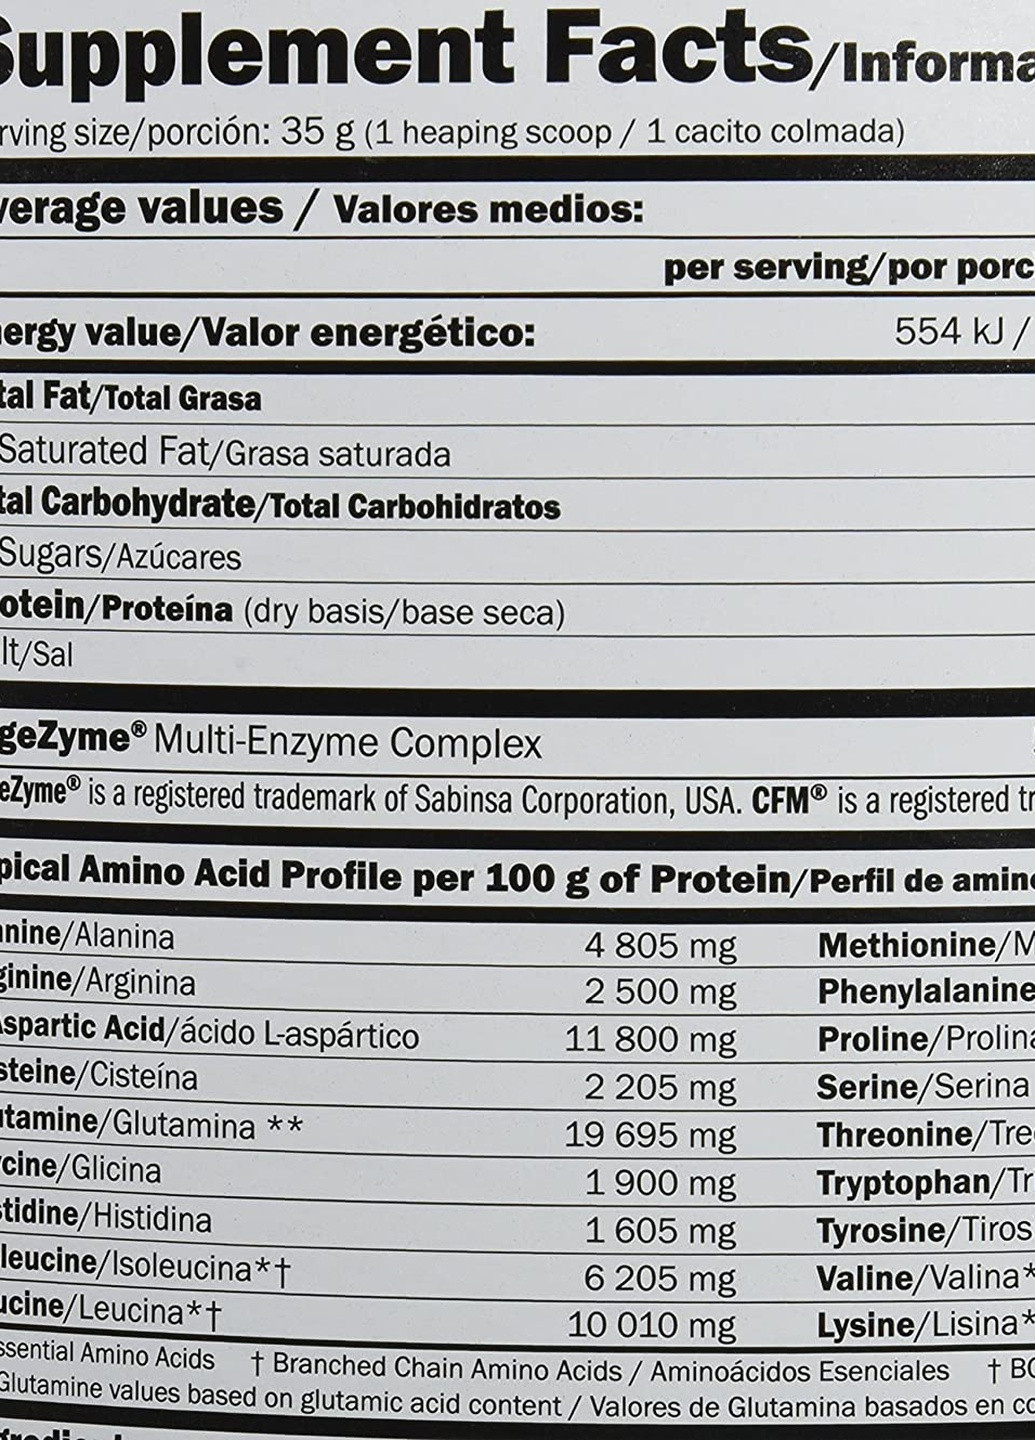 Протеин WheyPro FUSION 500g (Chocolate) Amix Nutrition (257658881)